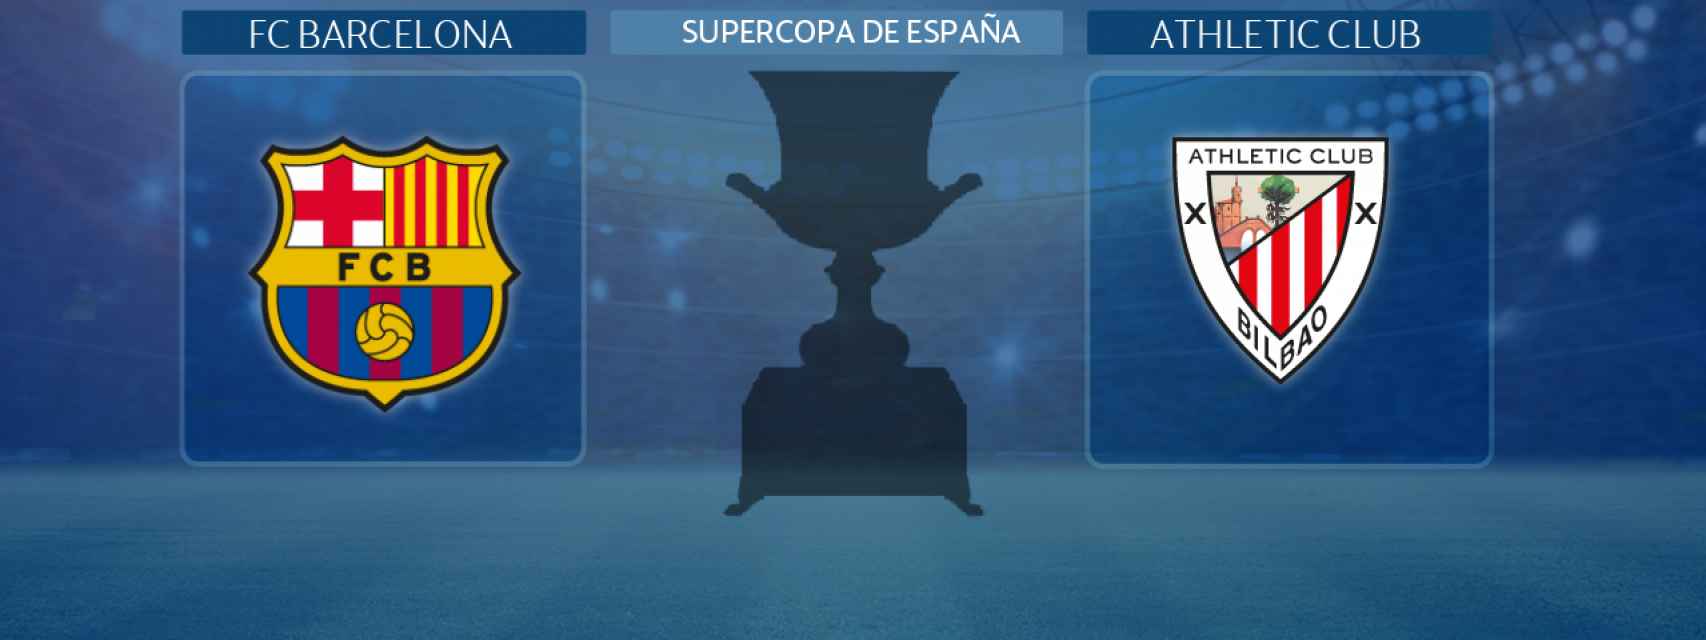 FC Barcelona - Athletic Club, final de la Supercopa de España